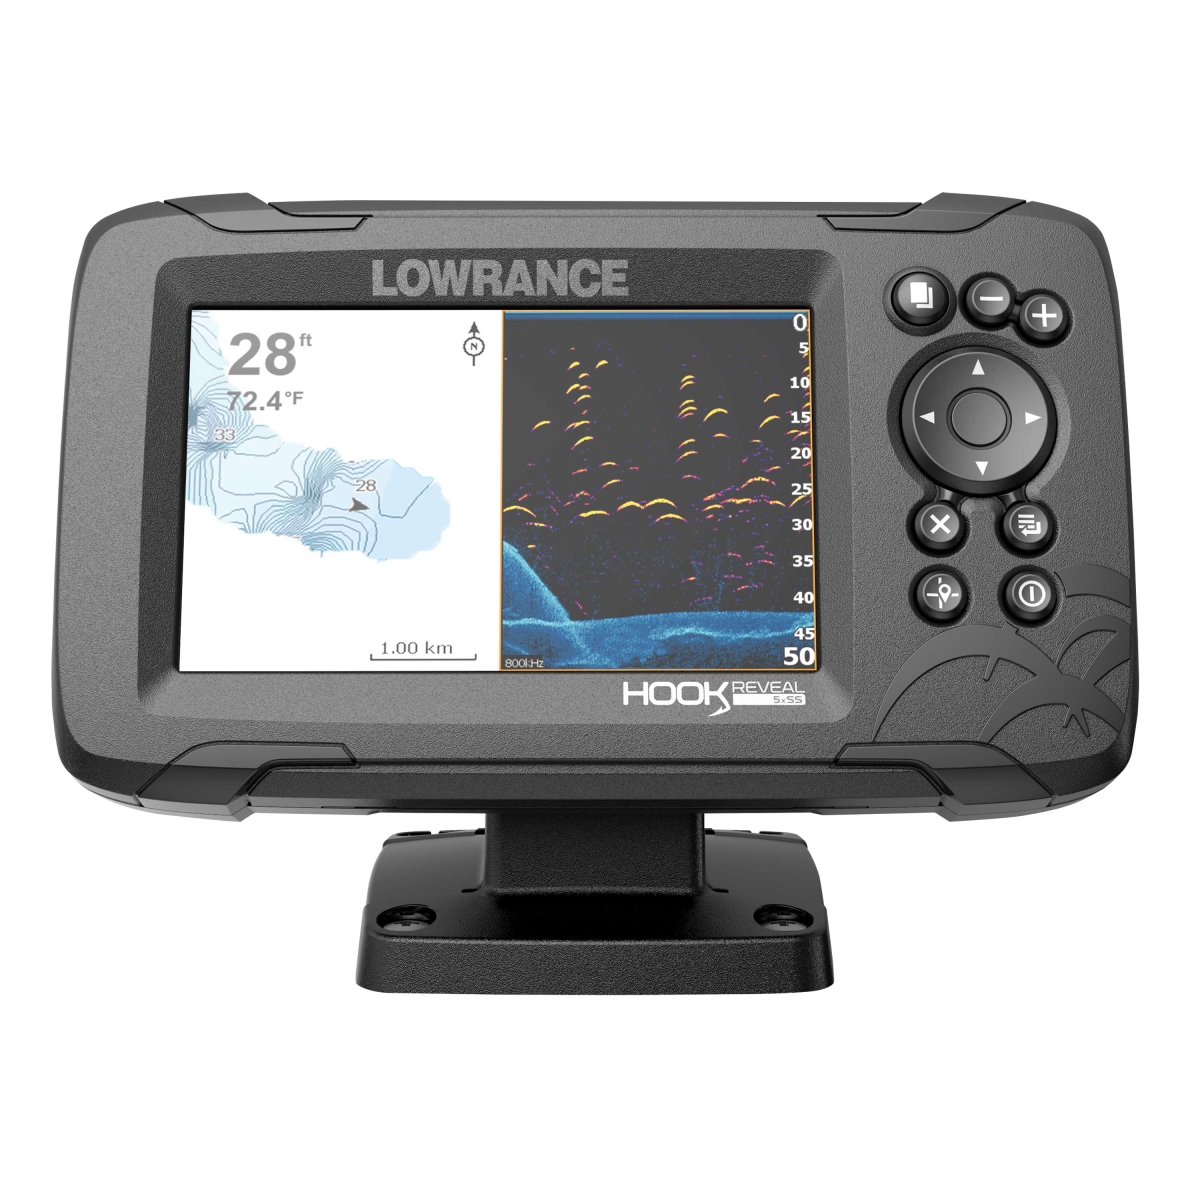 Lowrance HOOK Reveal SplitShot Fish Finder - CHIRP, DownScan, GPS Plotter - 5in -  000-15503-001